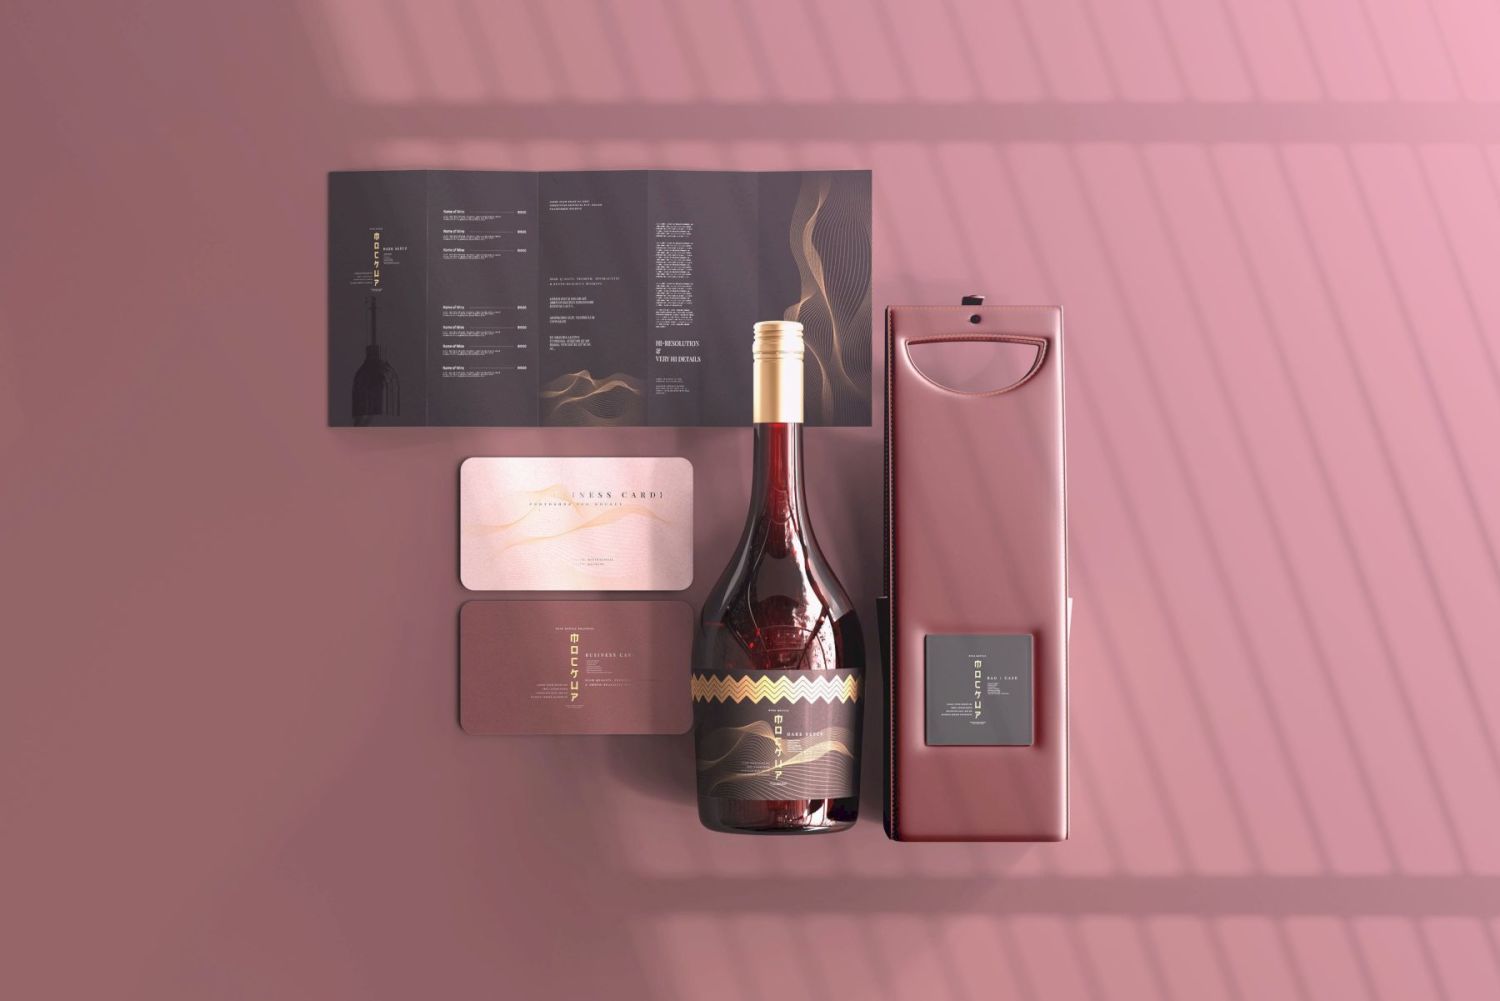 葡萄酒品牌样机系列 Wine Branding Mockup Collection插图37